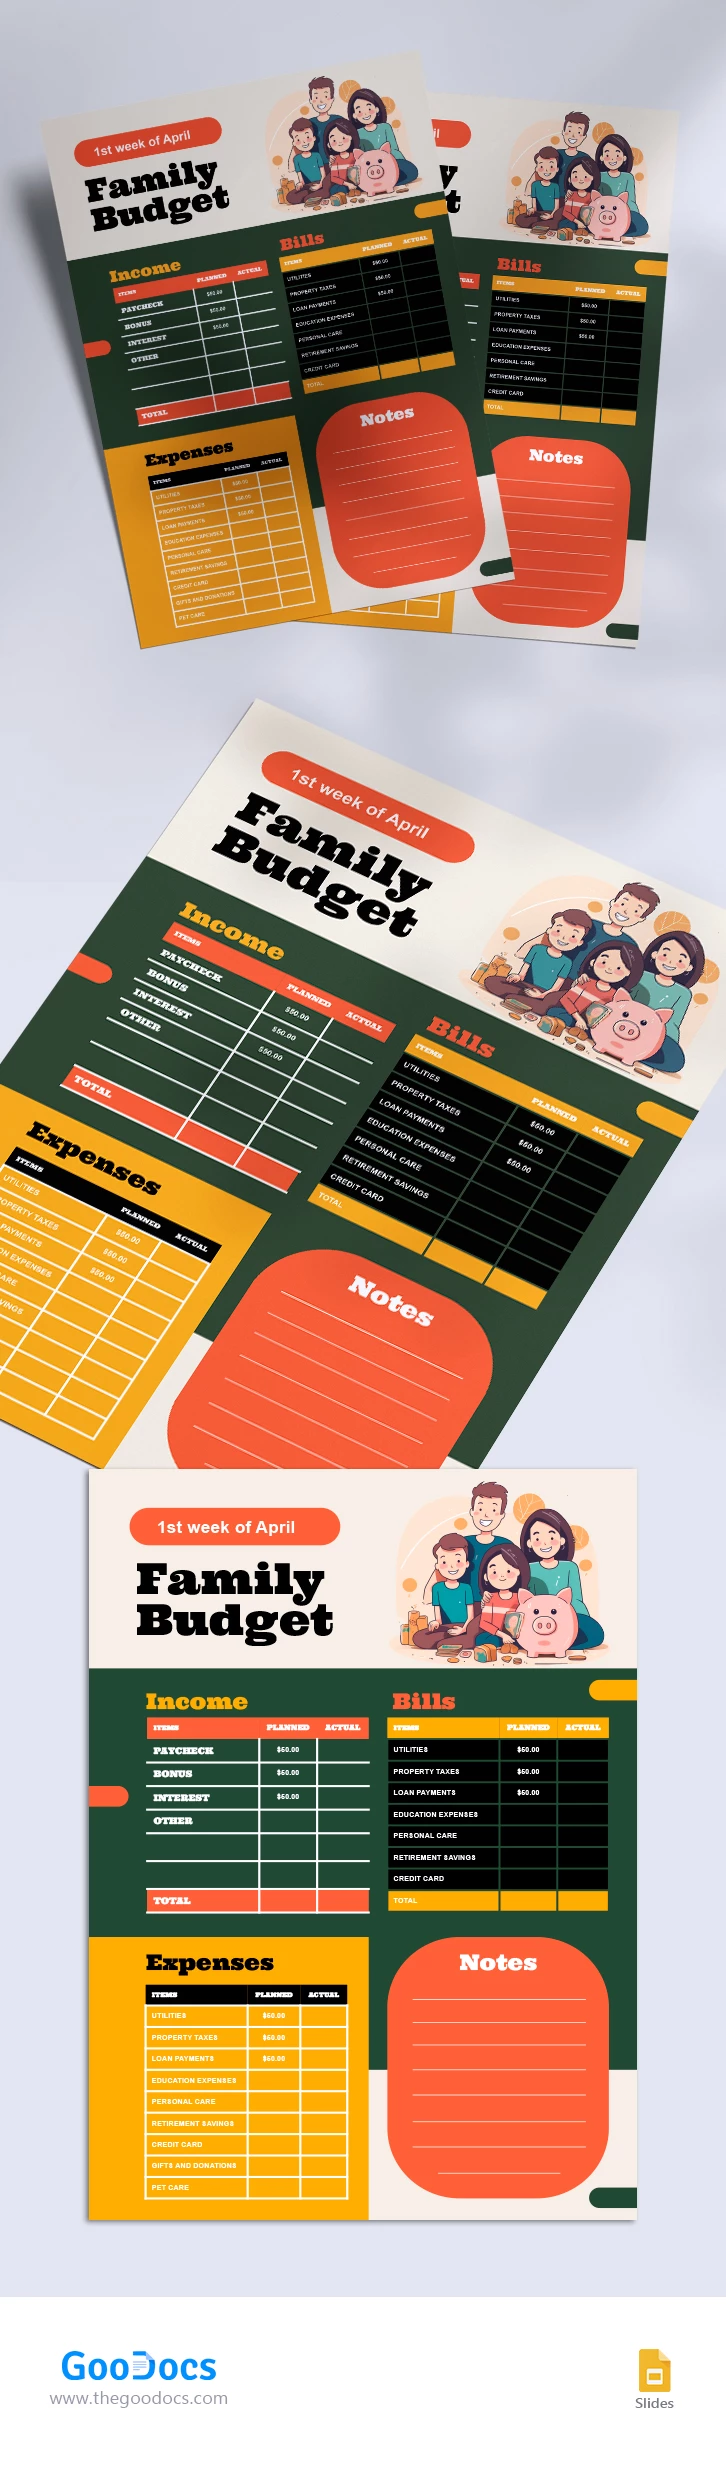 Family Budget - free Google Docs Template - 10067756